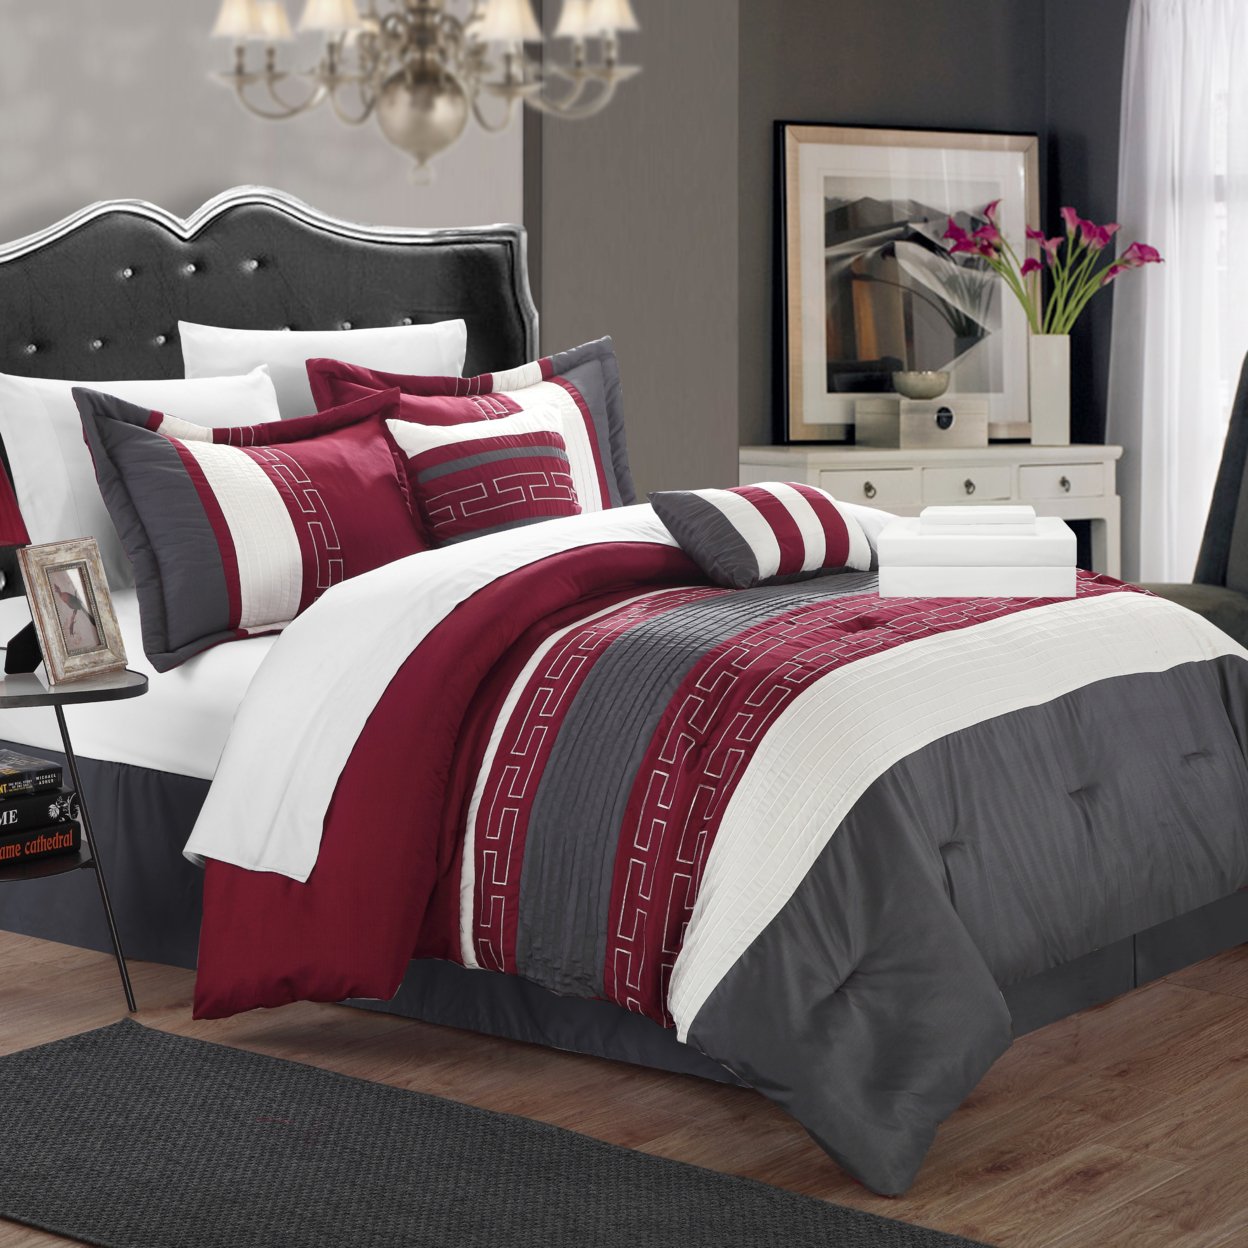 Coralie 10 Piece Bed In A Bag Comforter Set - Grey, King